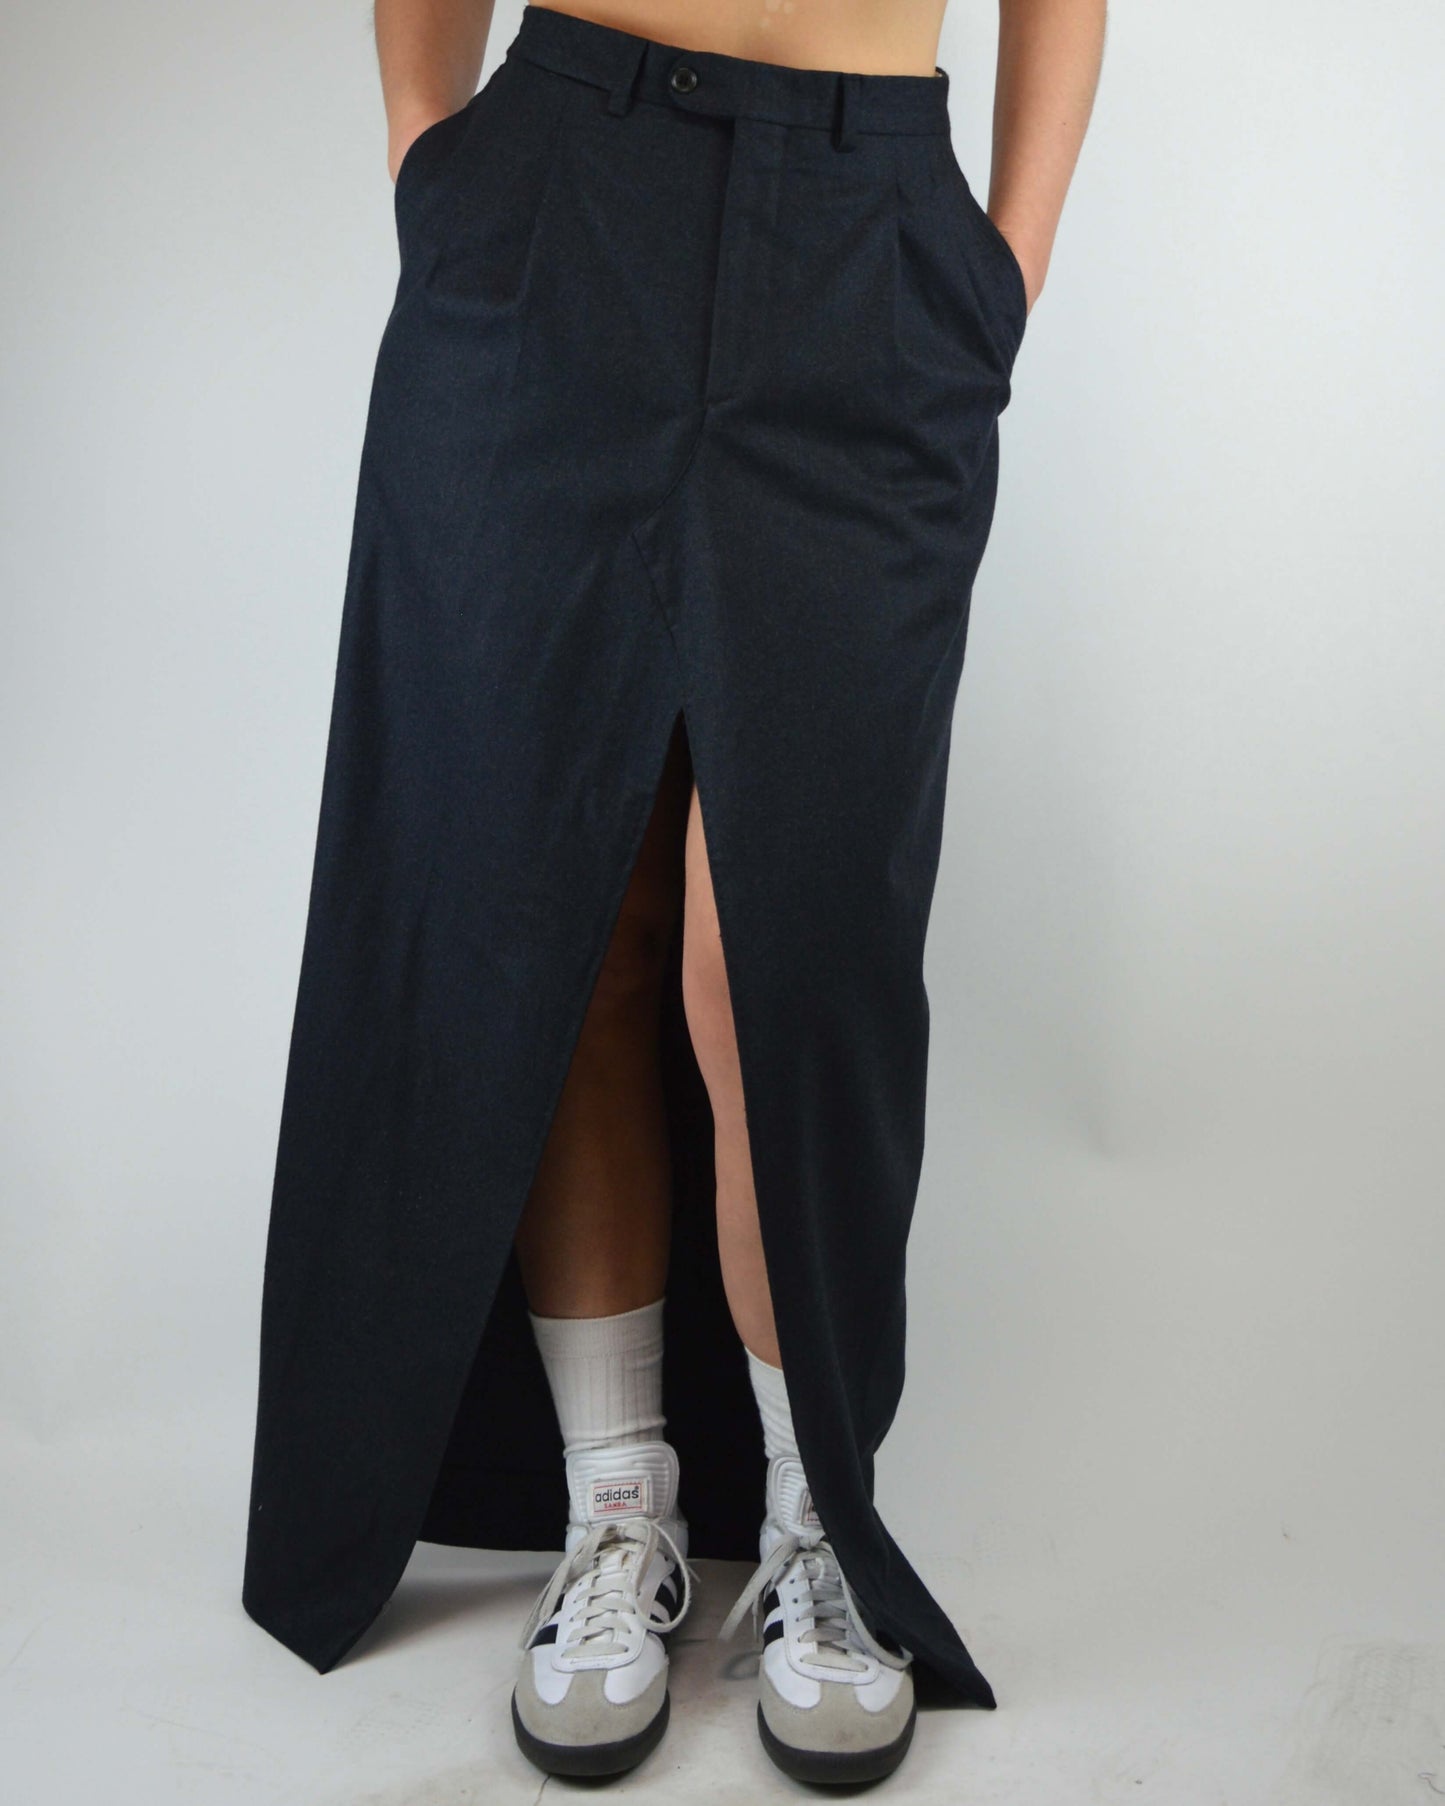 Long Skirt - Soft Grey Tall (S/M)